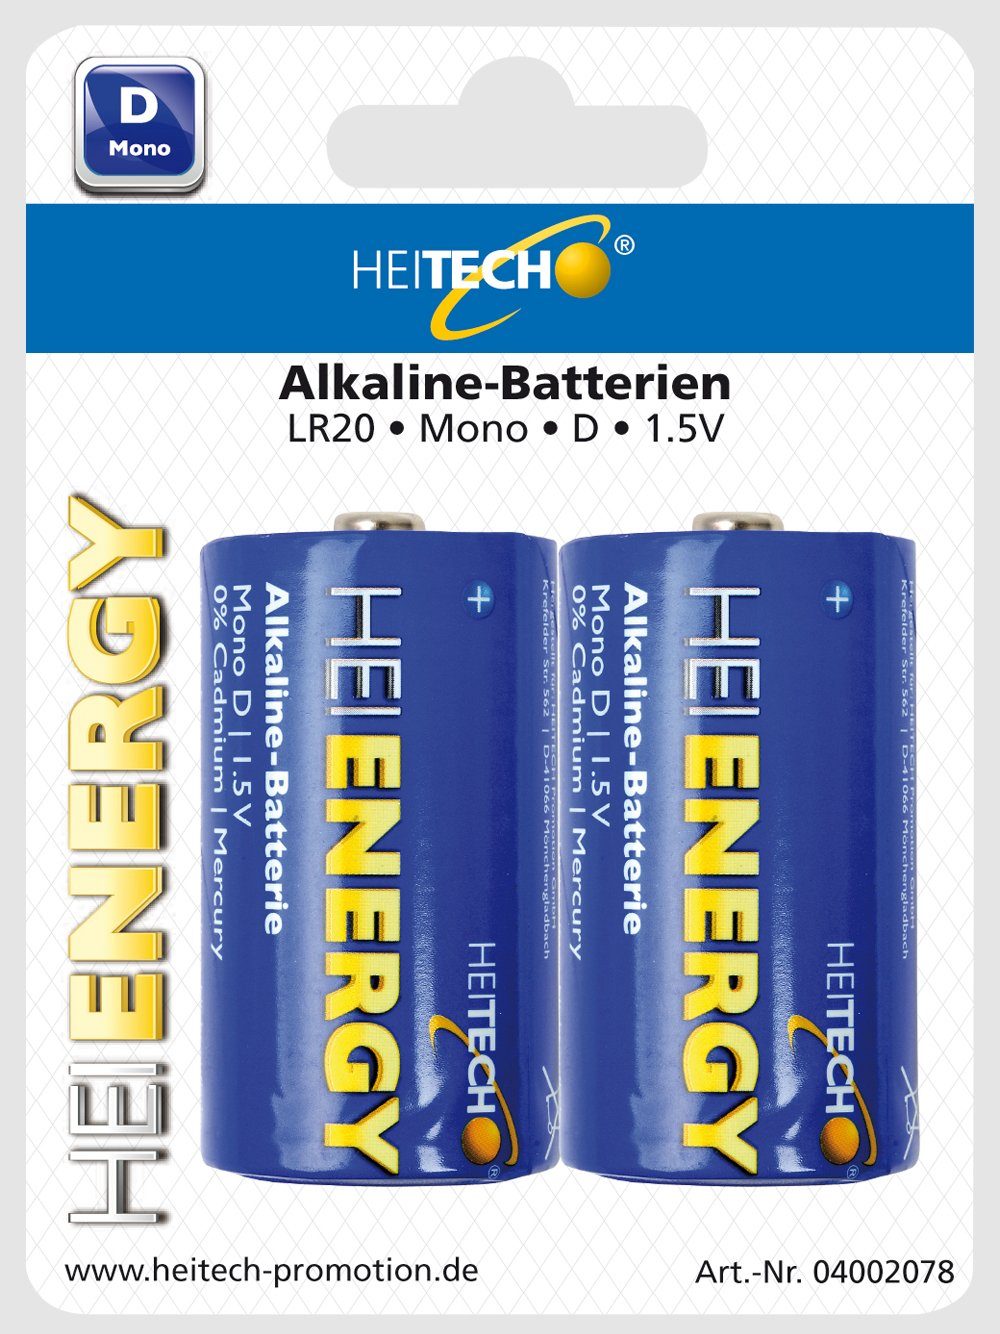 HEITECH Alkaline Batterien Mono D, LR20 - 1,5 Volt, (2-er Pack) Batterie Batterie